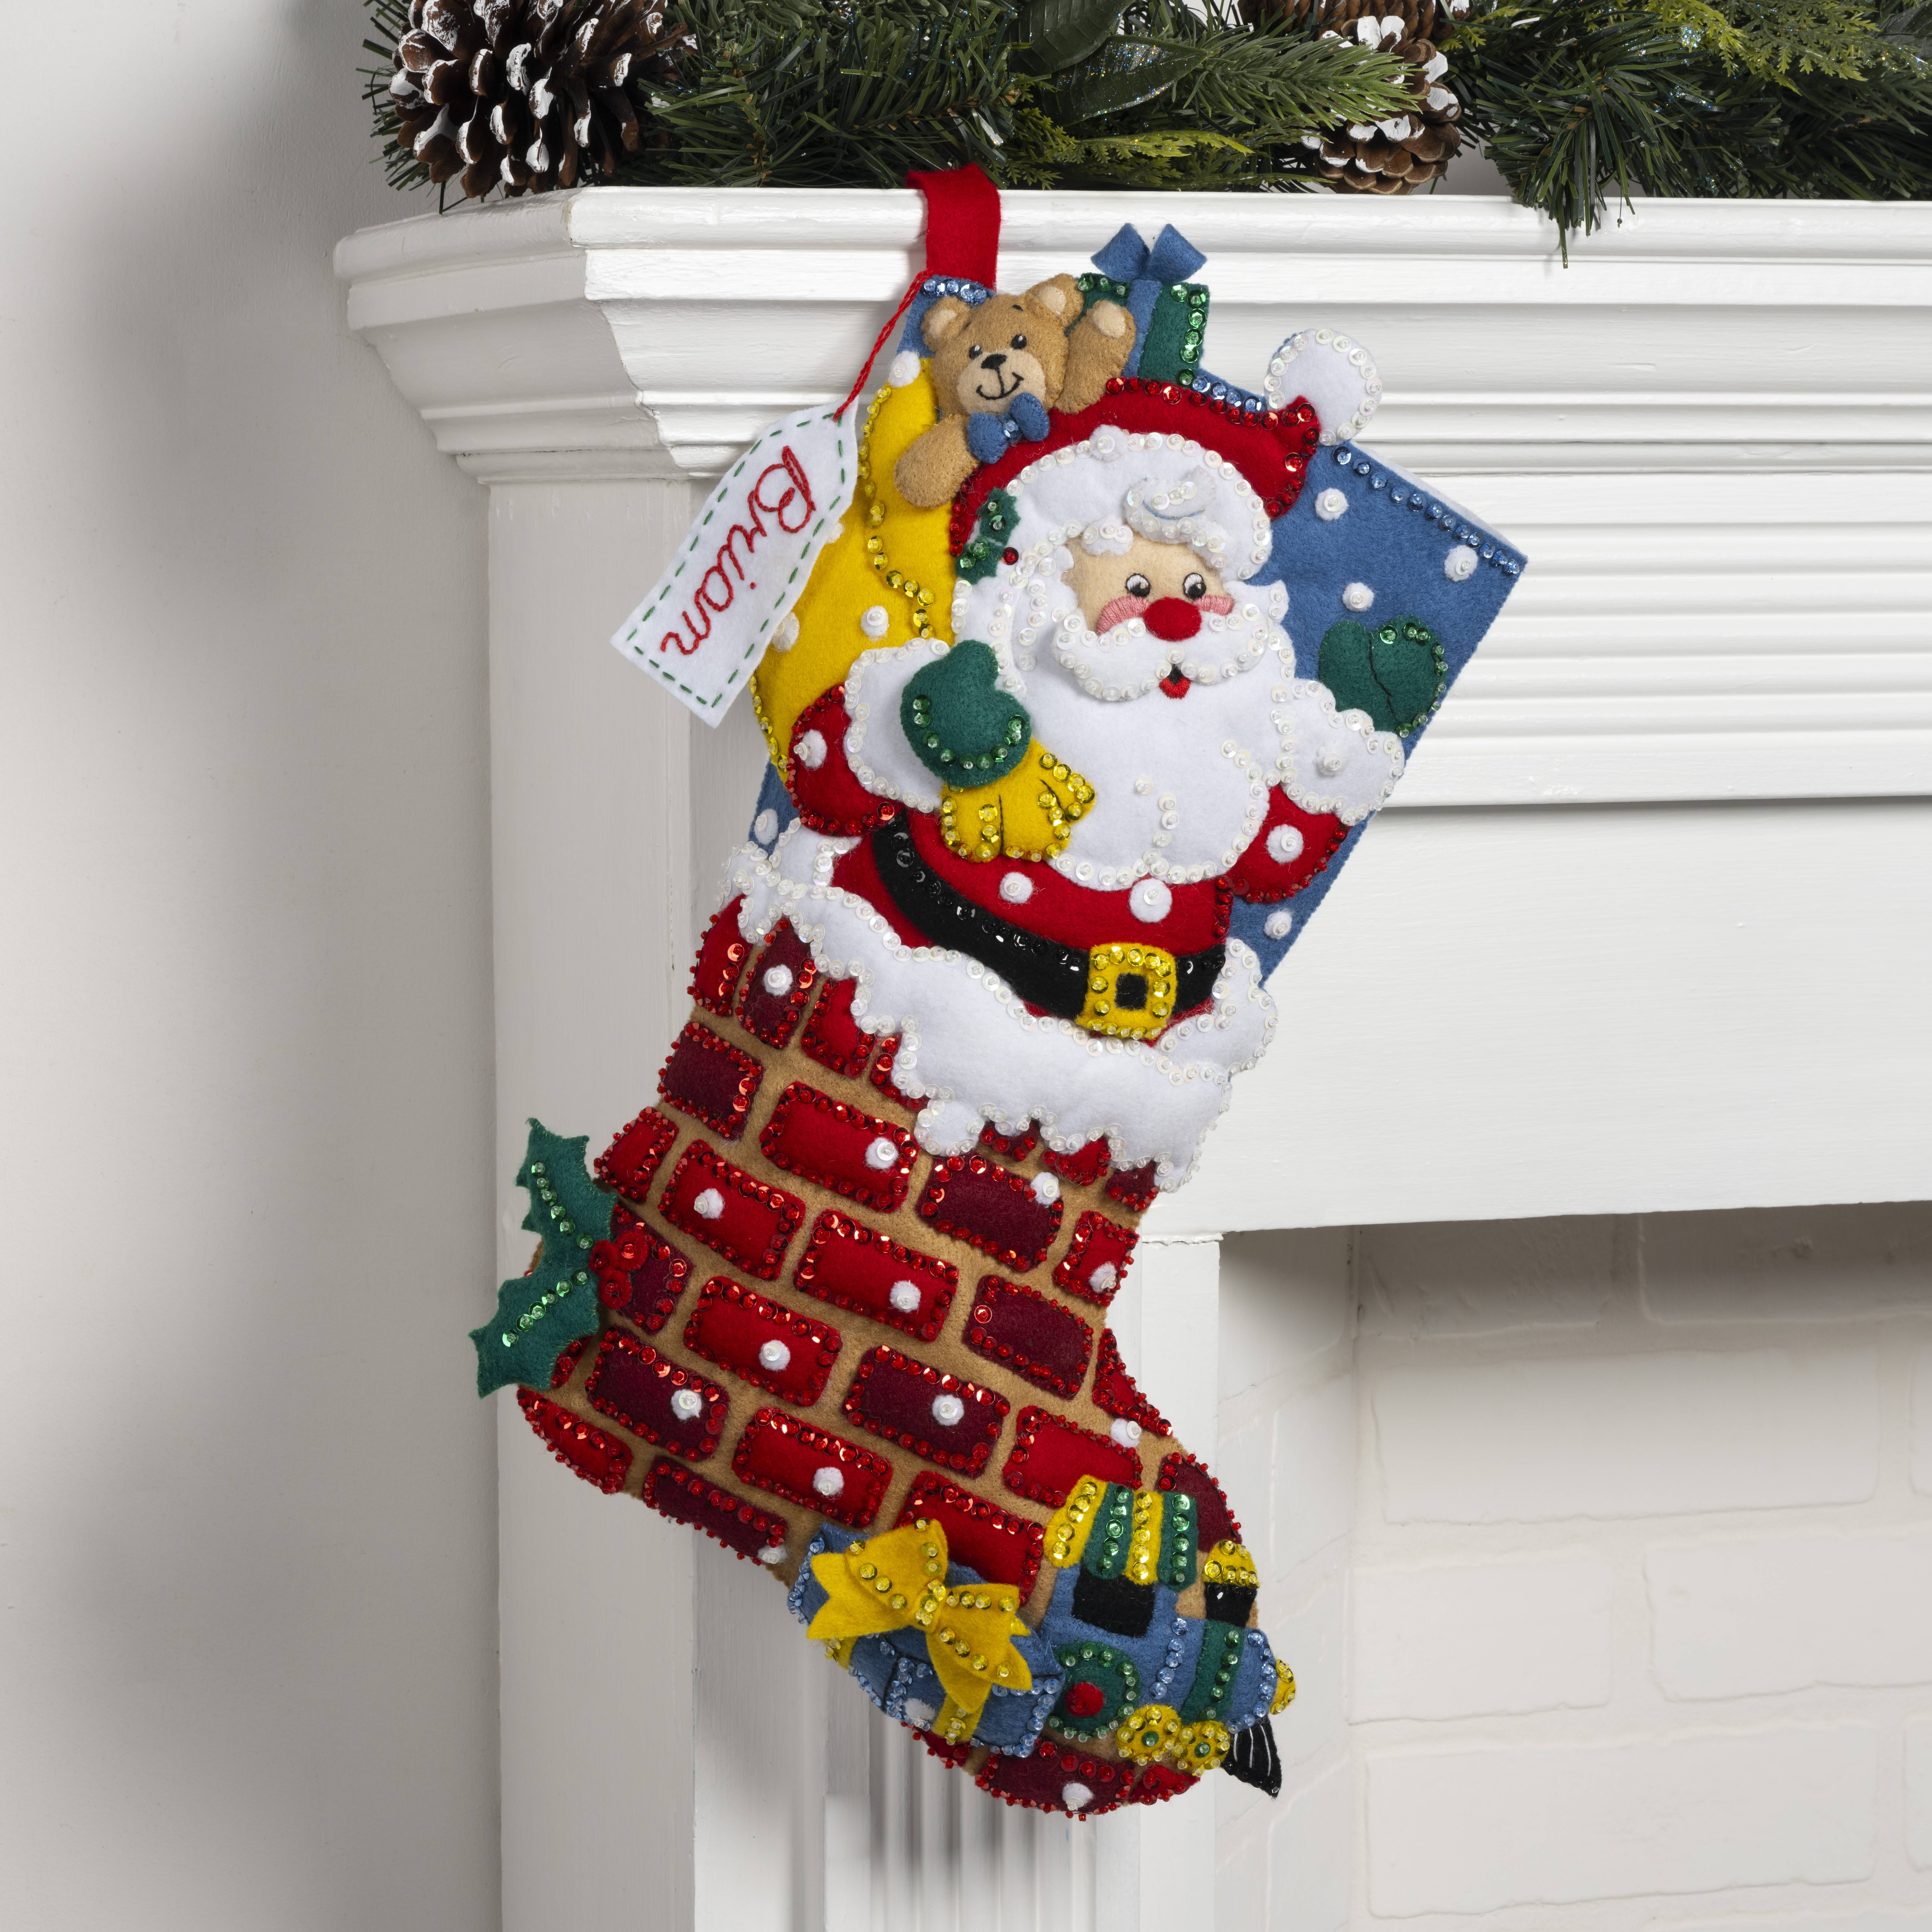 Bucilla 18-Inch Christmas Stocking Felt Appliqué Kit, 86055 The Procession   Christmas stockings, Christmas stocking kits, Cross stitch christmas  stockings